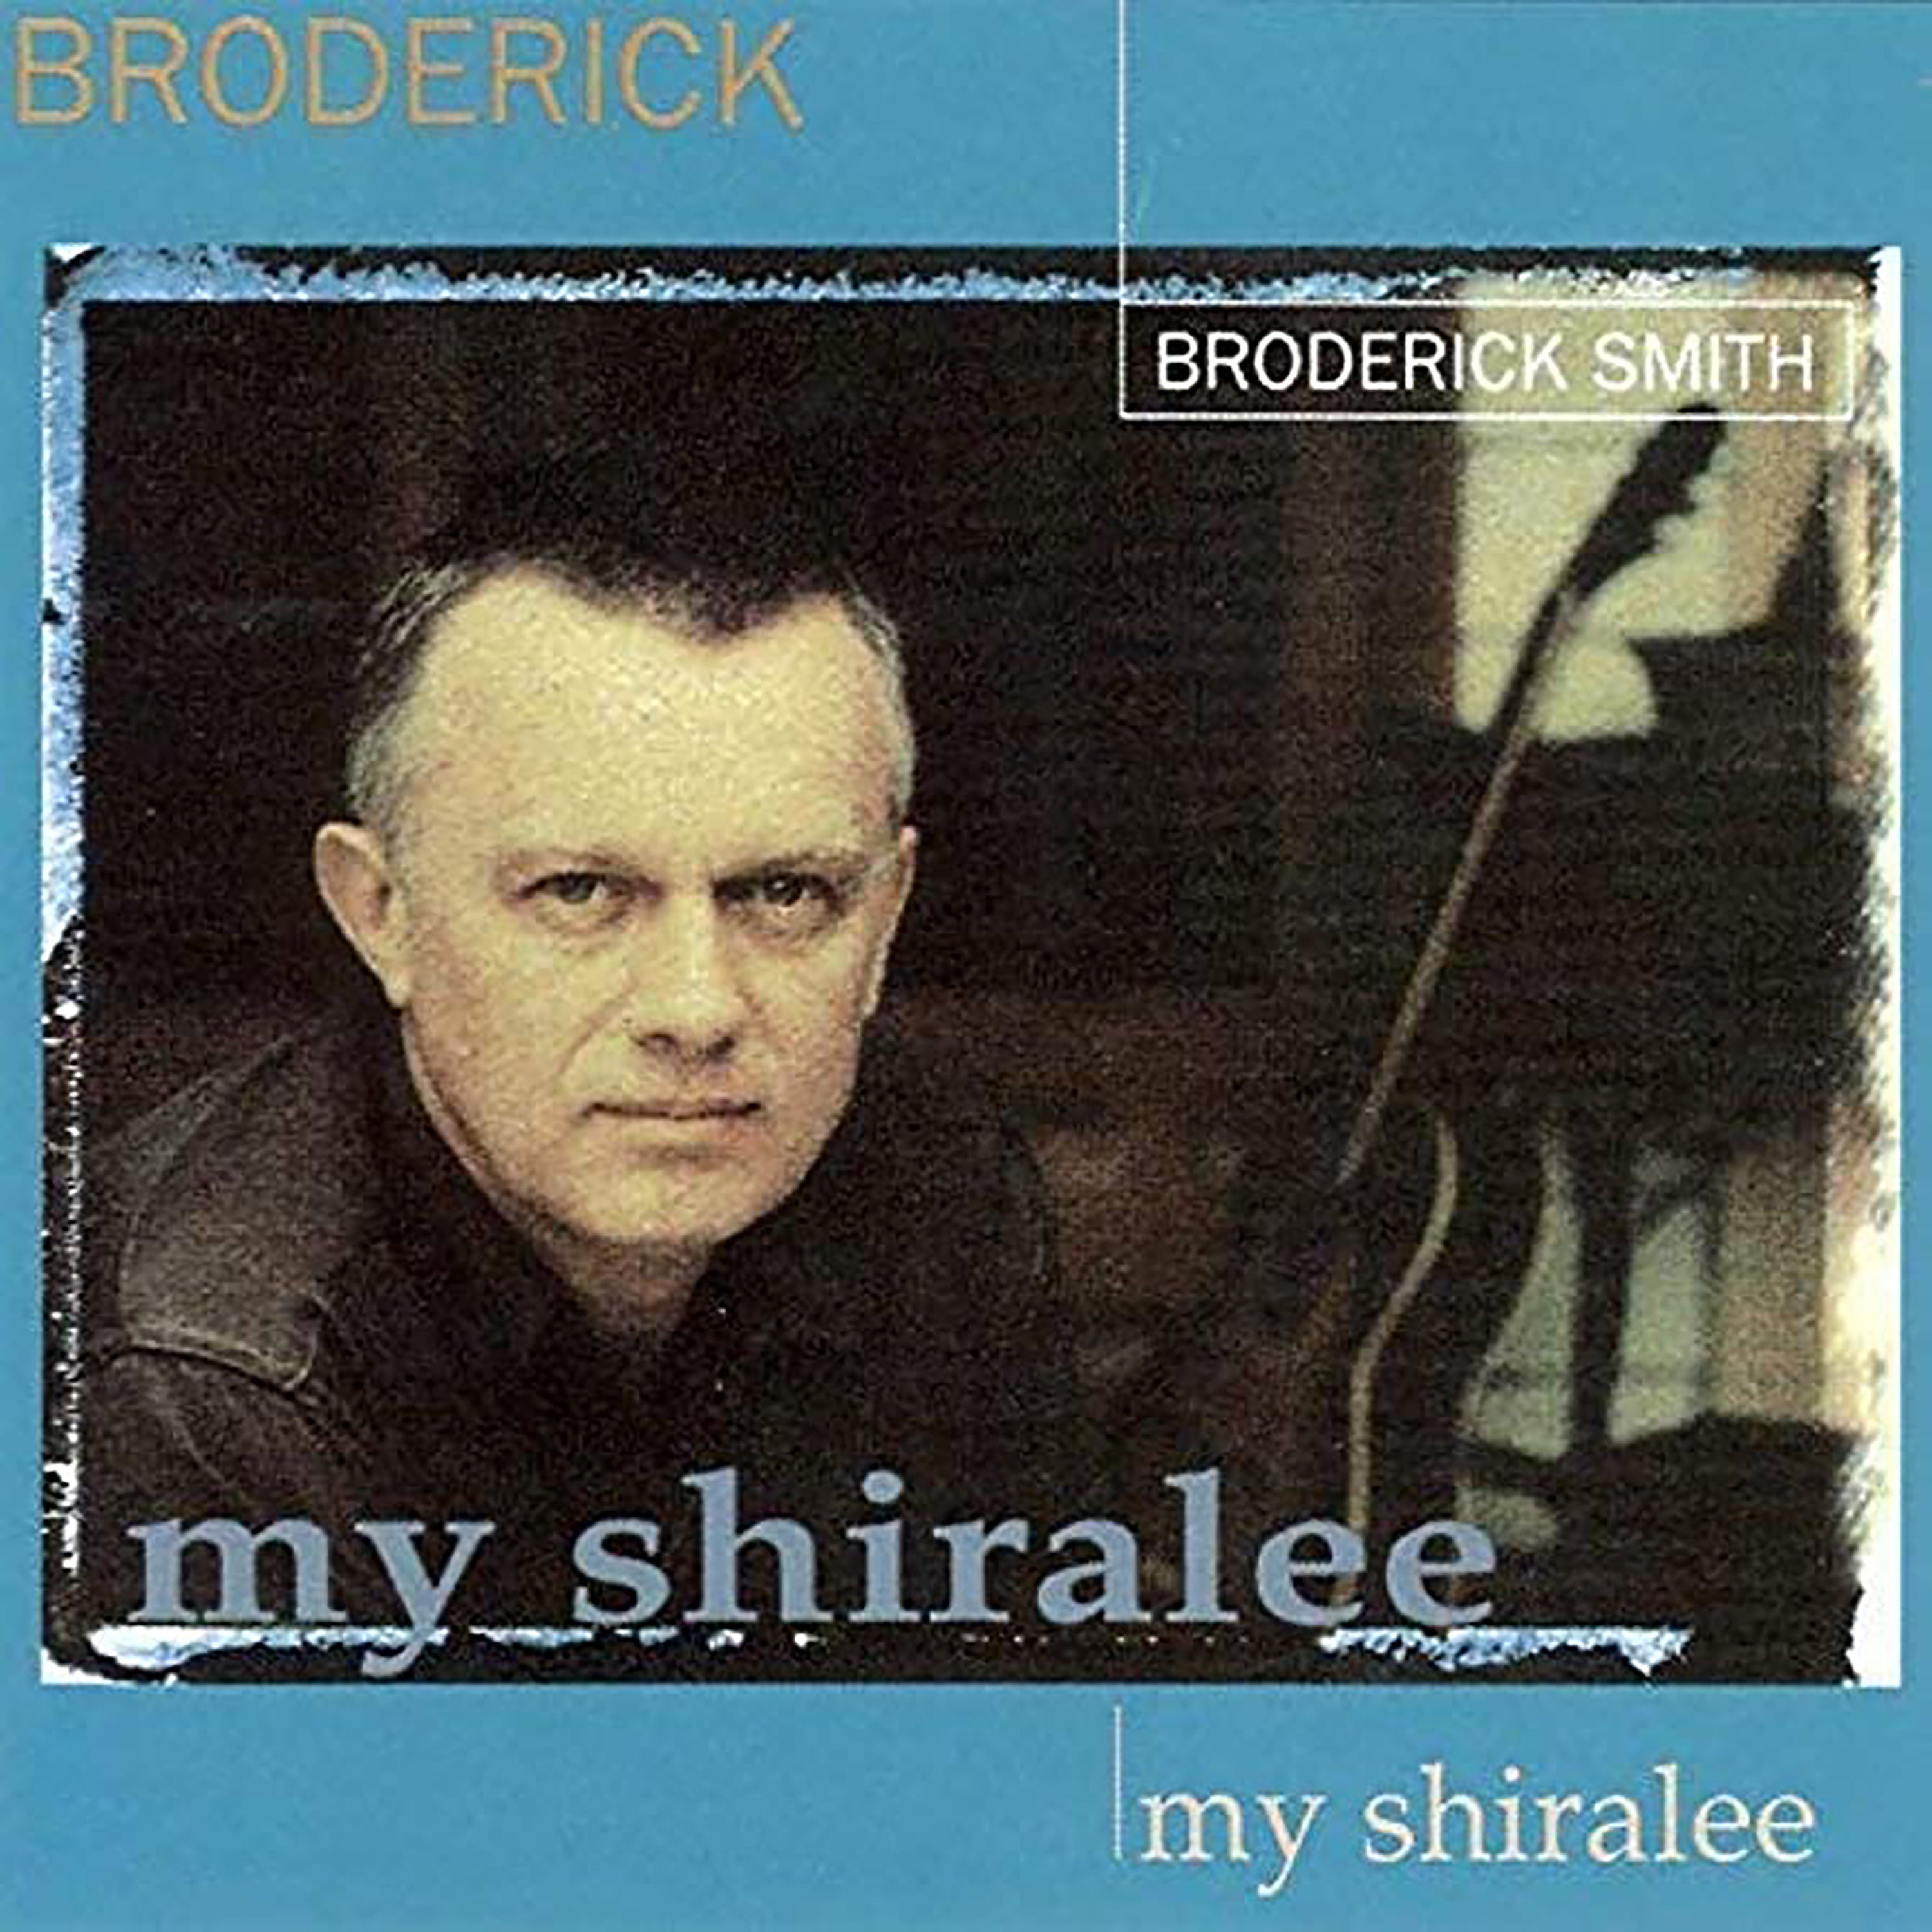 BRODERICK SMITH - MY SHIRALEE